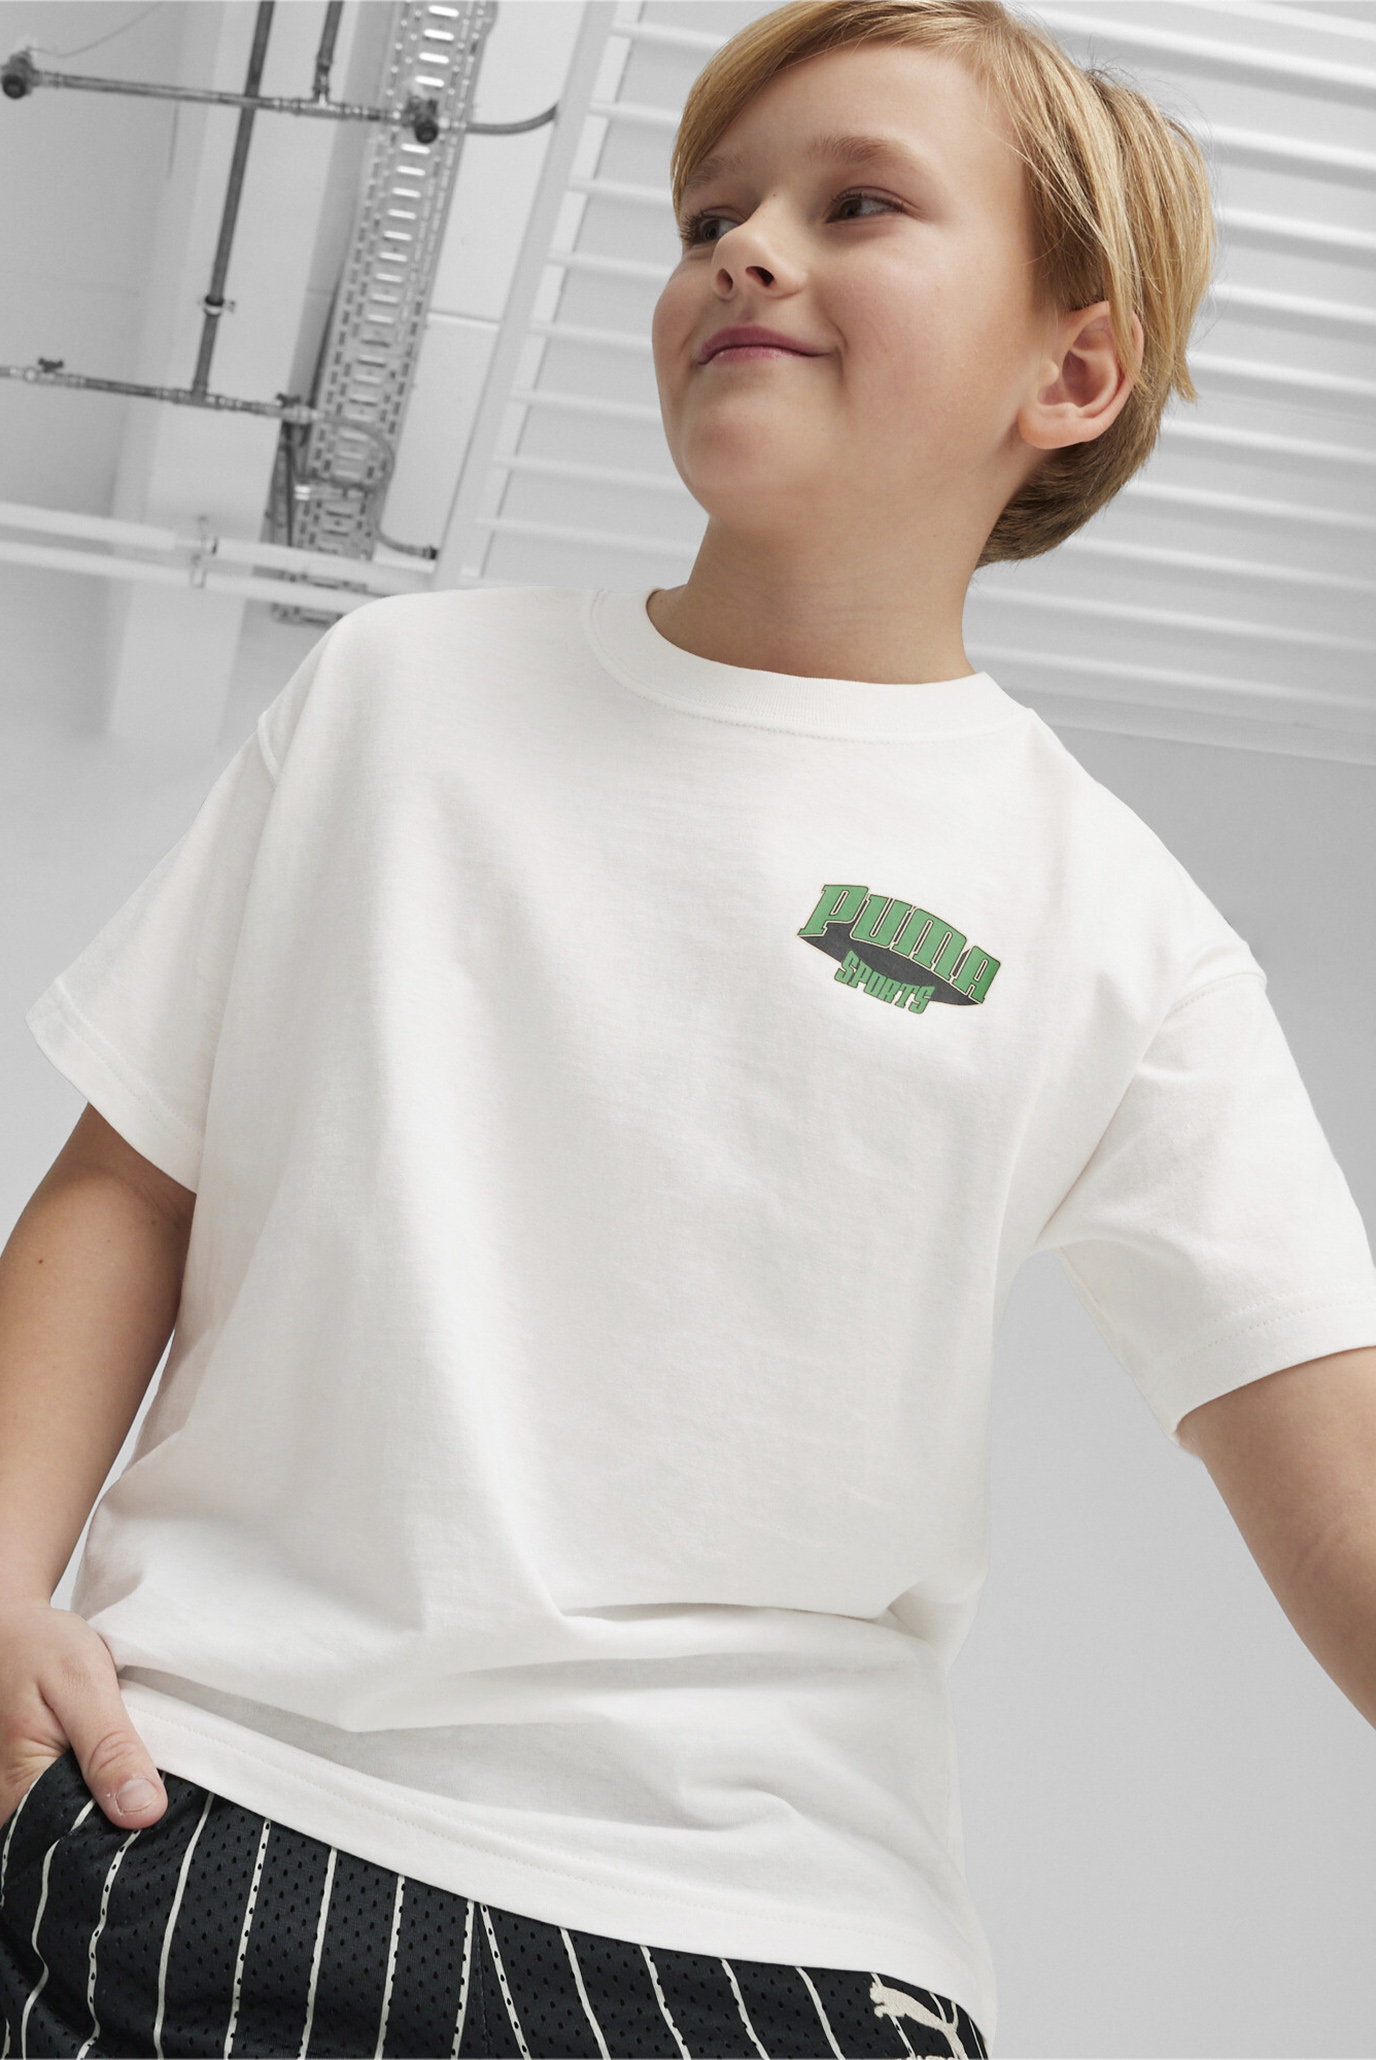 Детская белая футболка FOR THE FANBASE Youth Graphic Tee 1